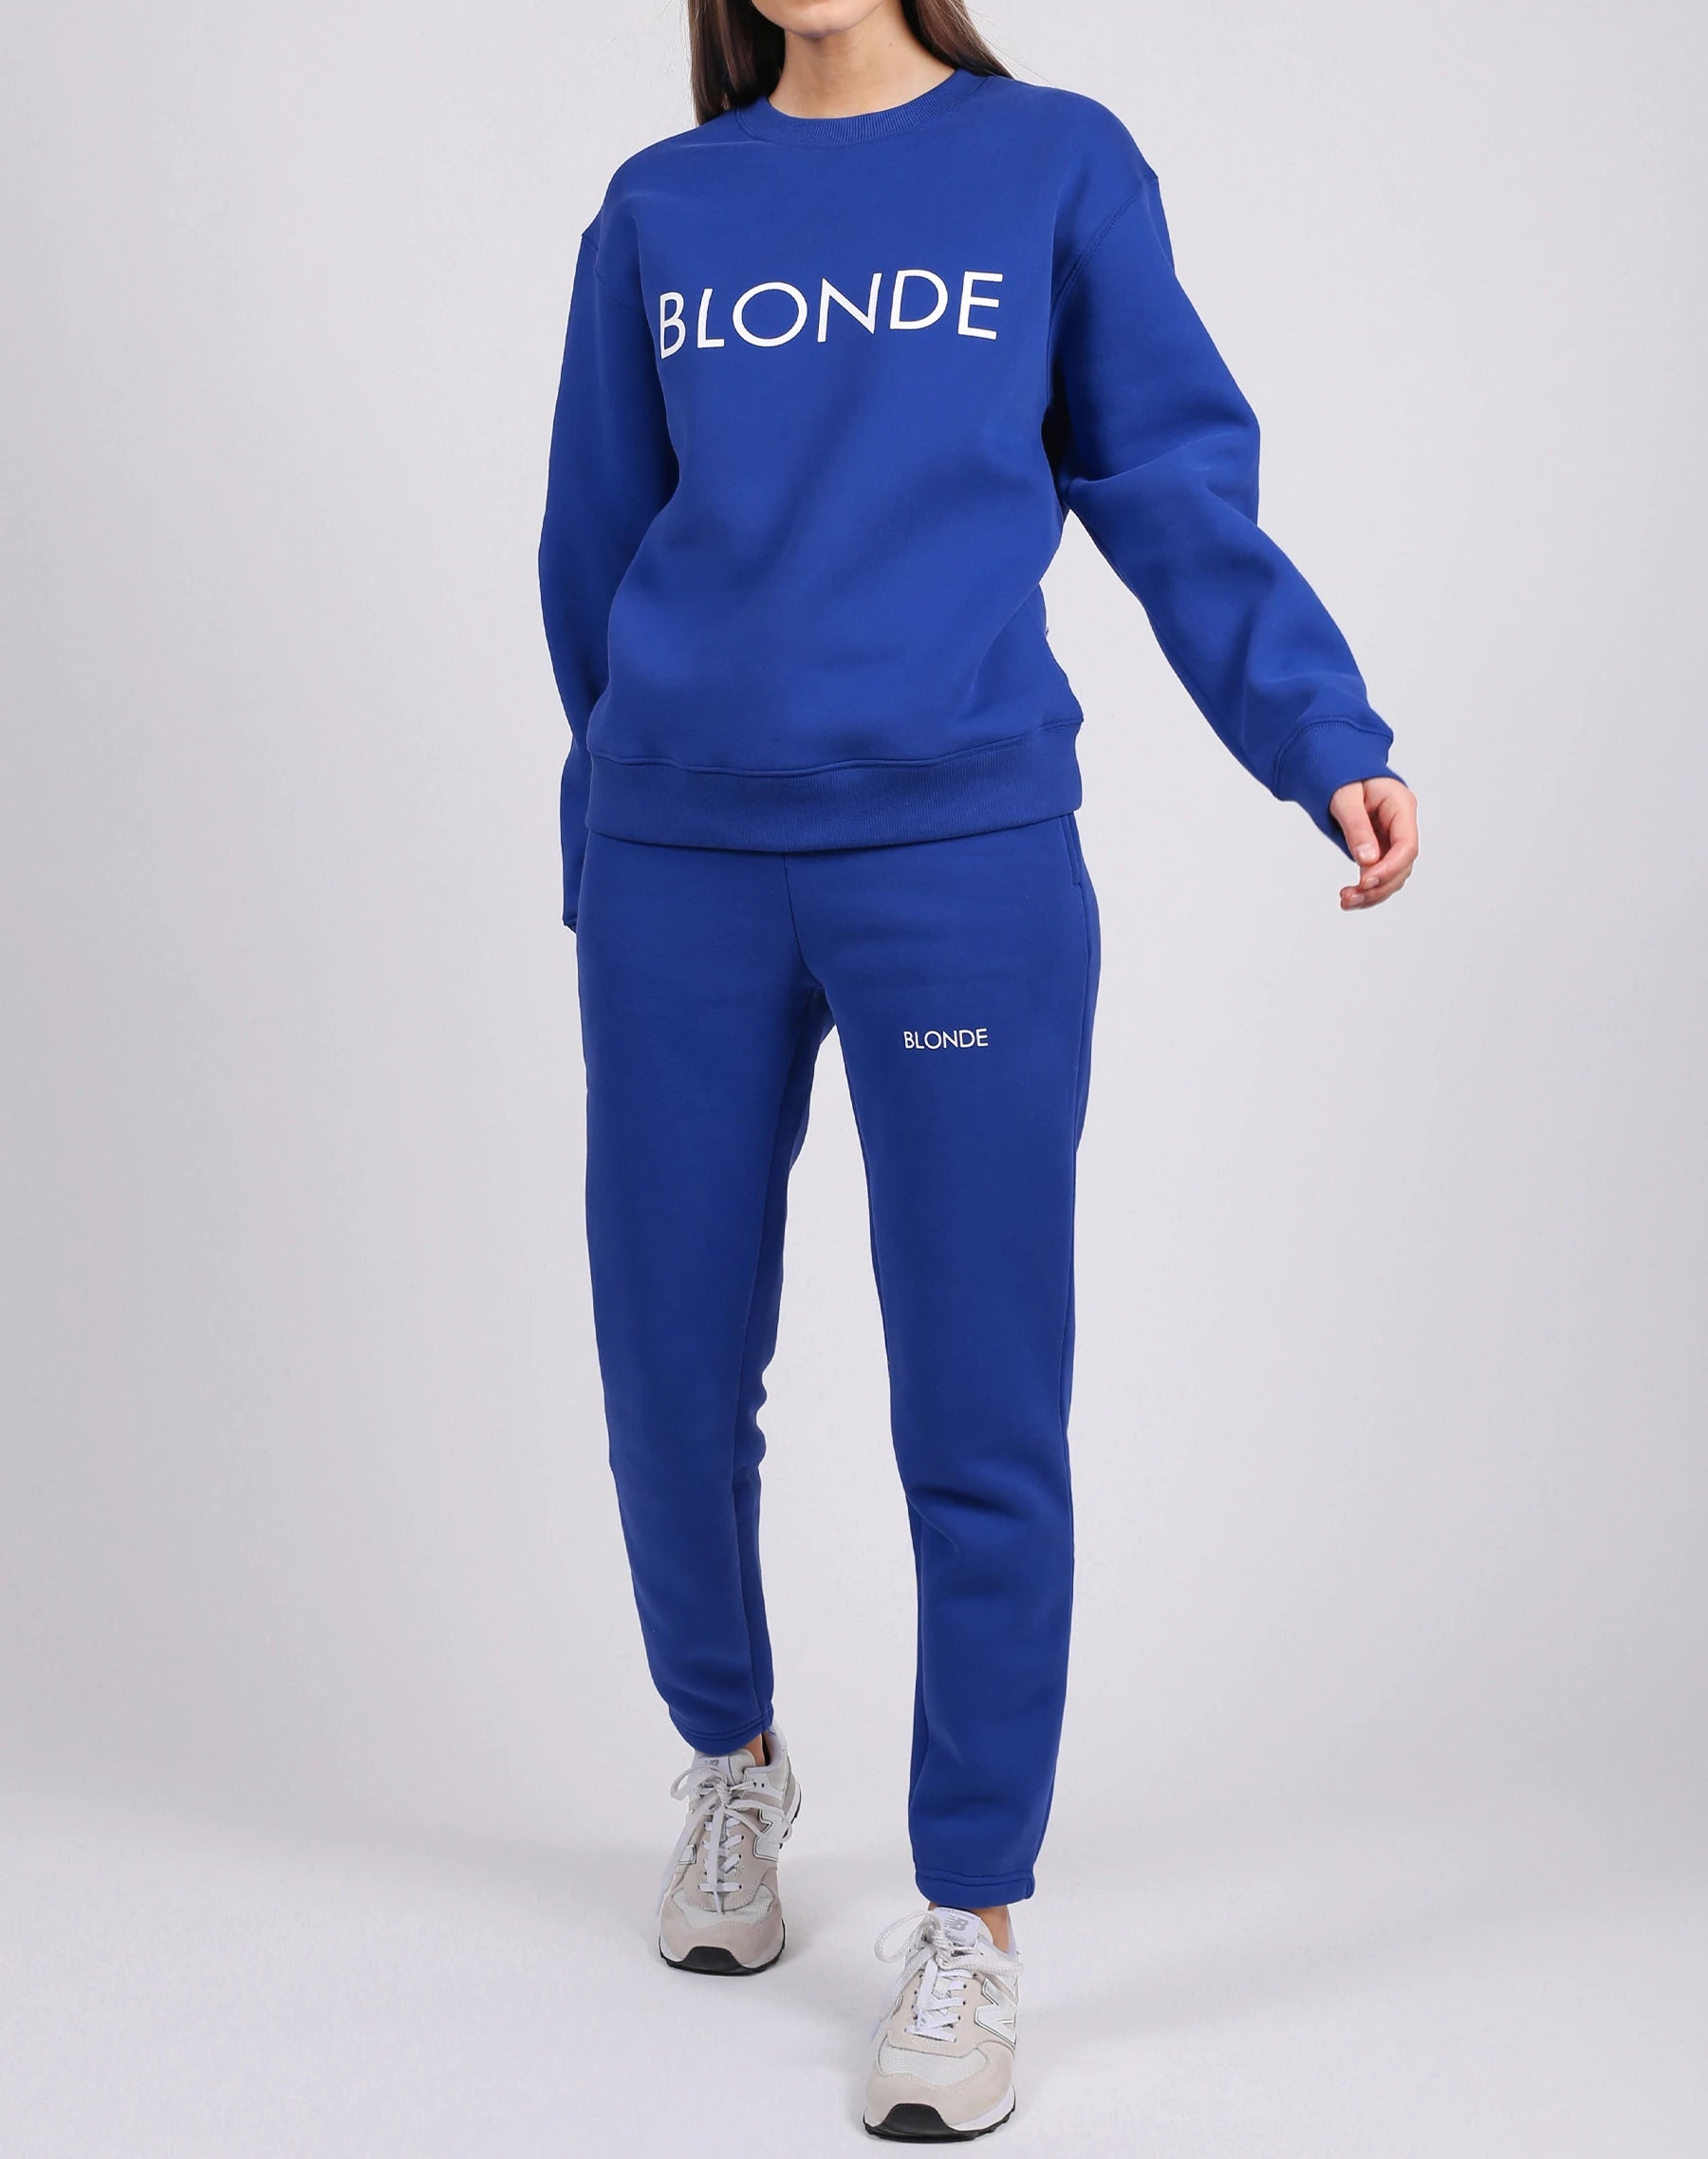 The "BLONDE" Classic Crew Neck Sweatshirt | Capri Blue